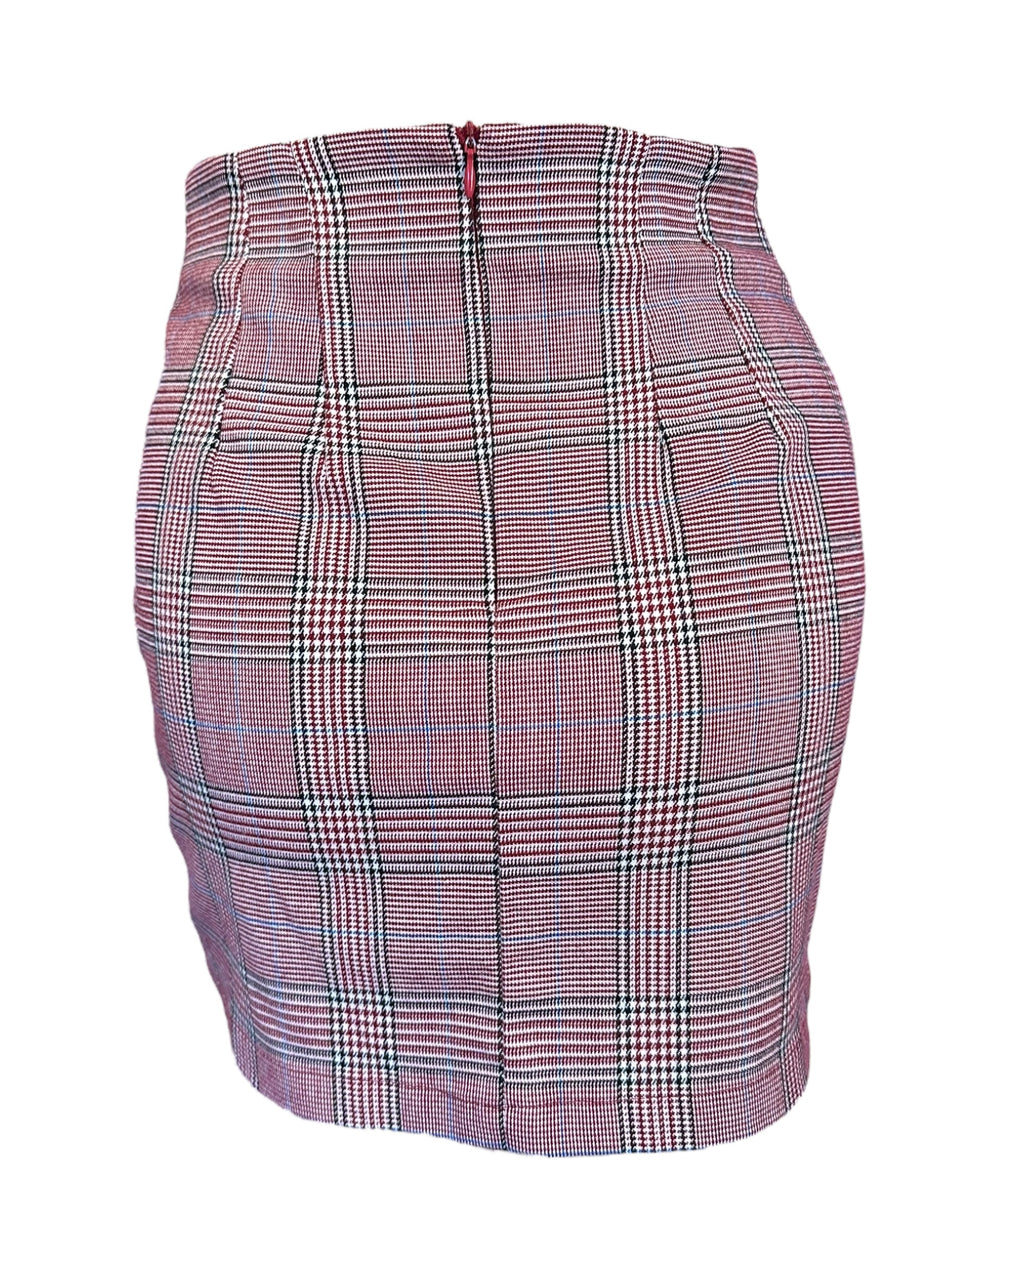 Red Plaid John Galt Mini Skirt, XS